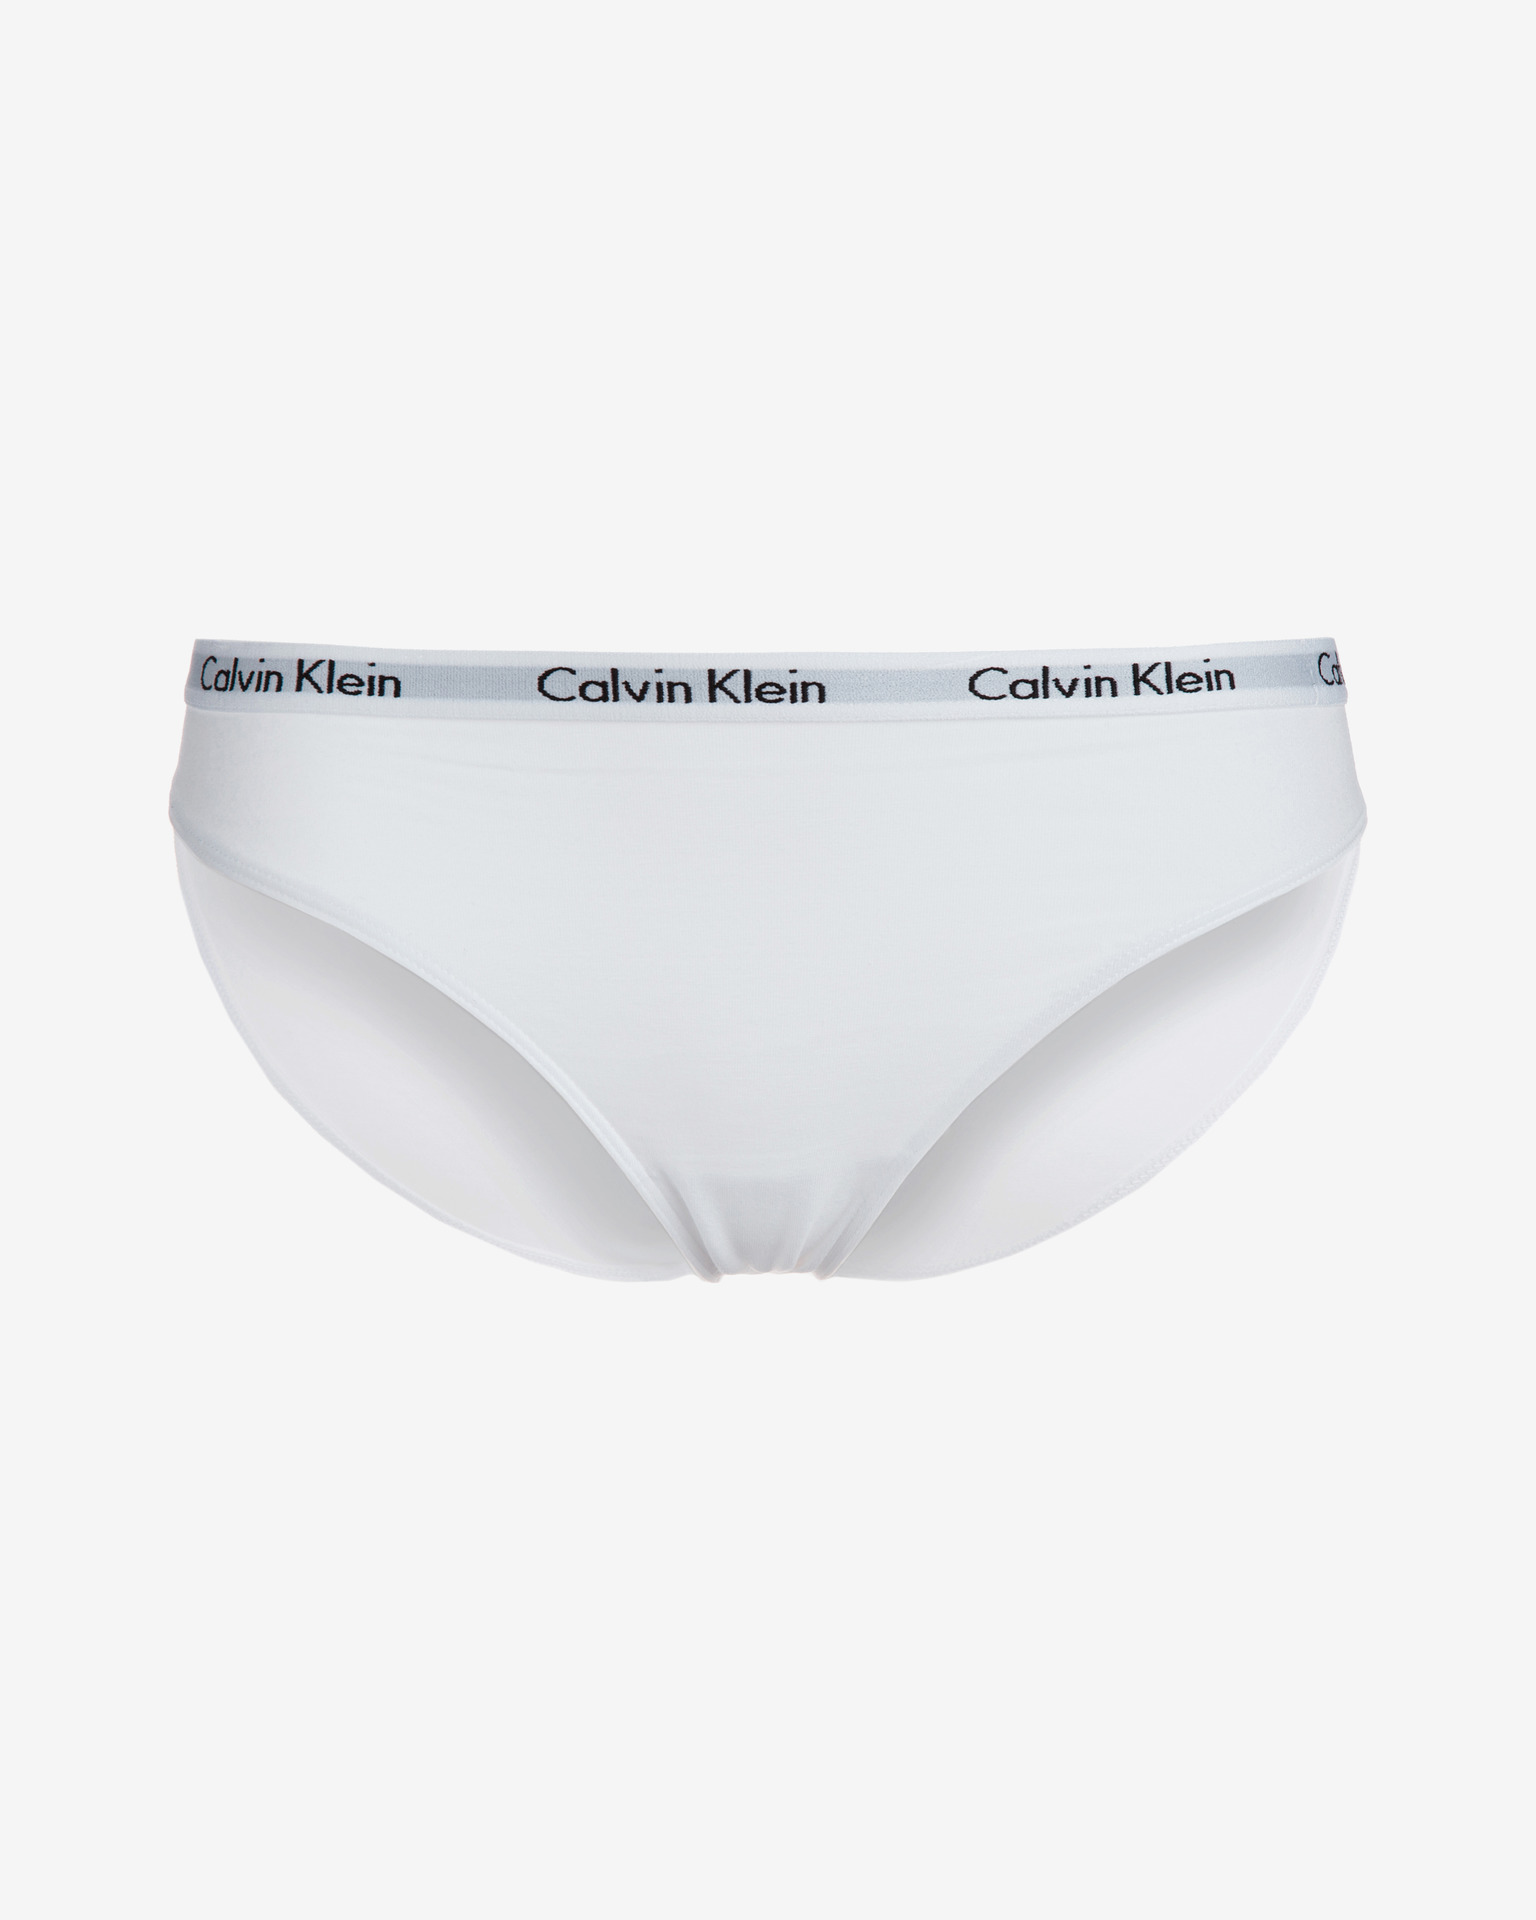 Fotografie Calvin Klein bílé kalhotky Bikini Slip - M